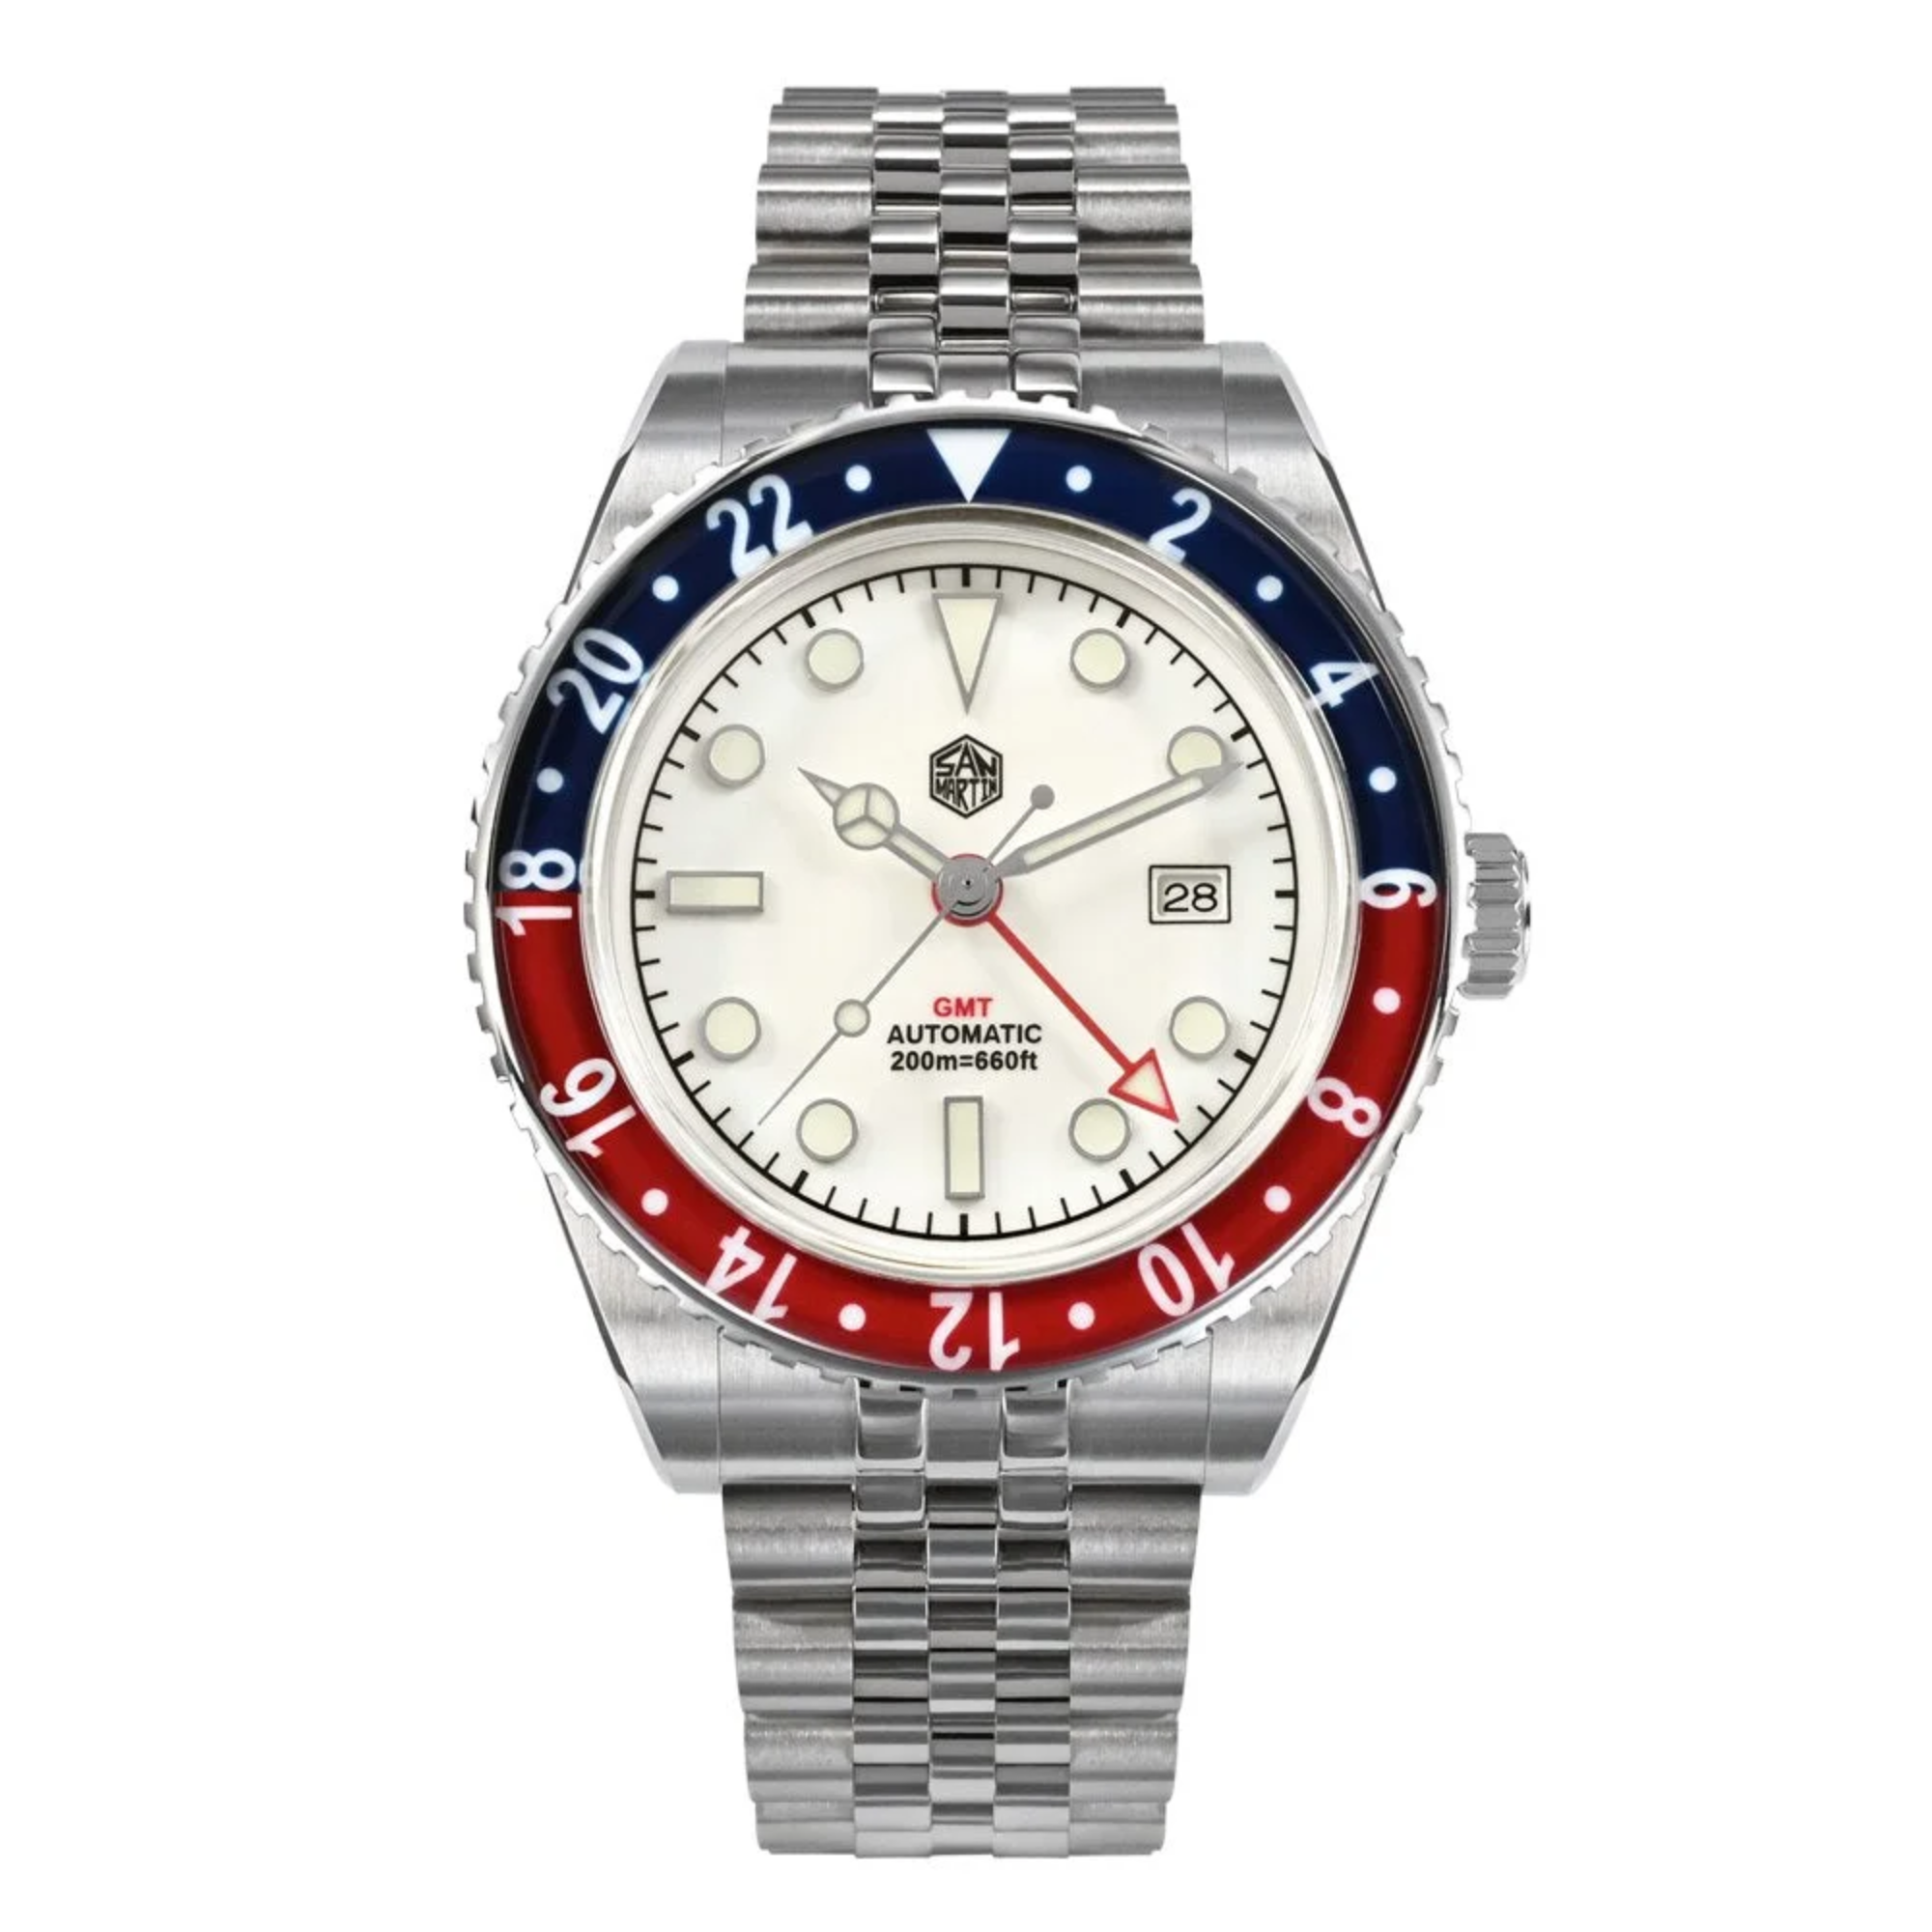 San Martin Vintage GMT Watch SN005-G4 - White san martin watches india online